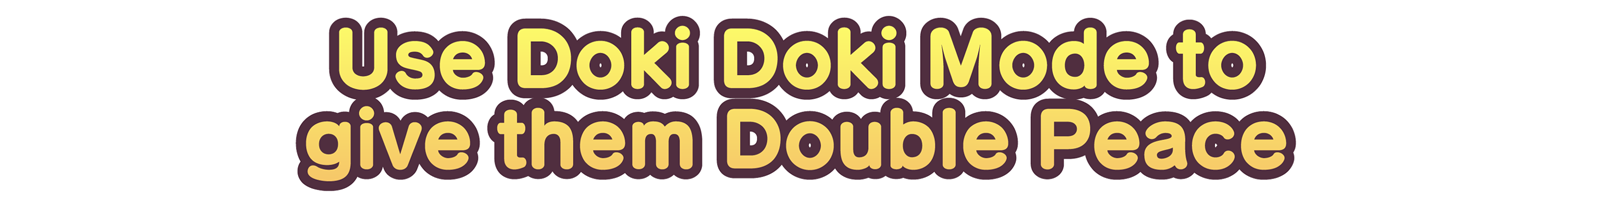 Use Doki Doki Mode to give them Double Peace